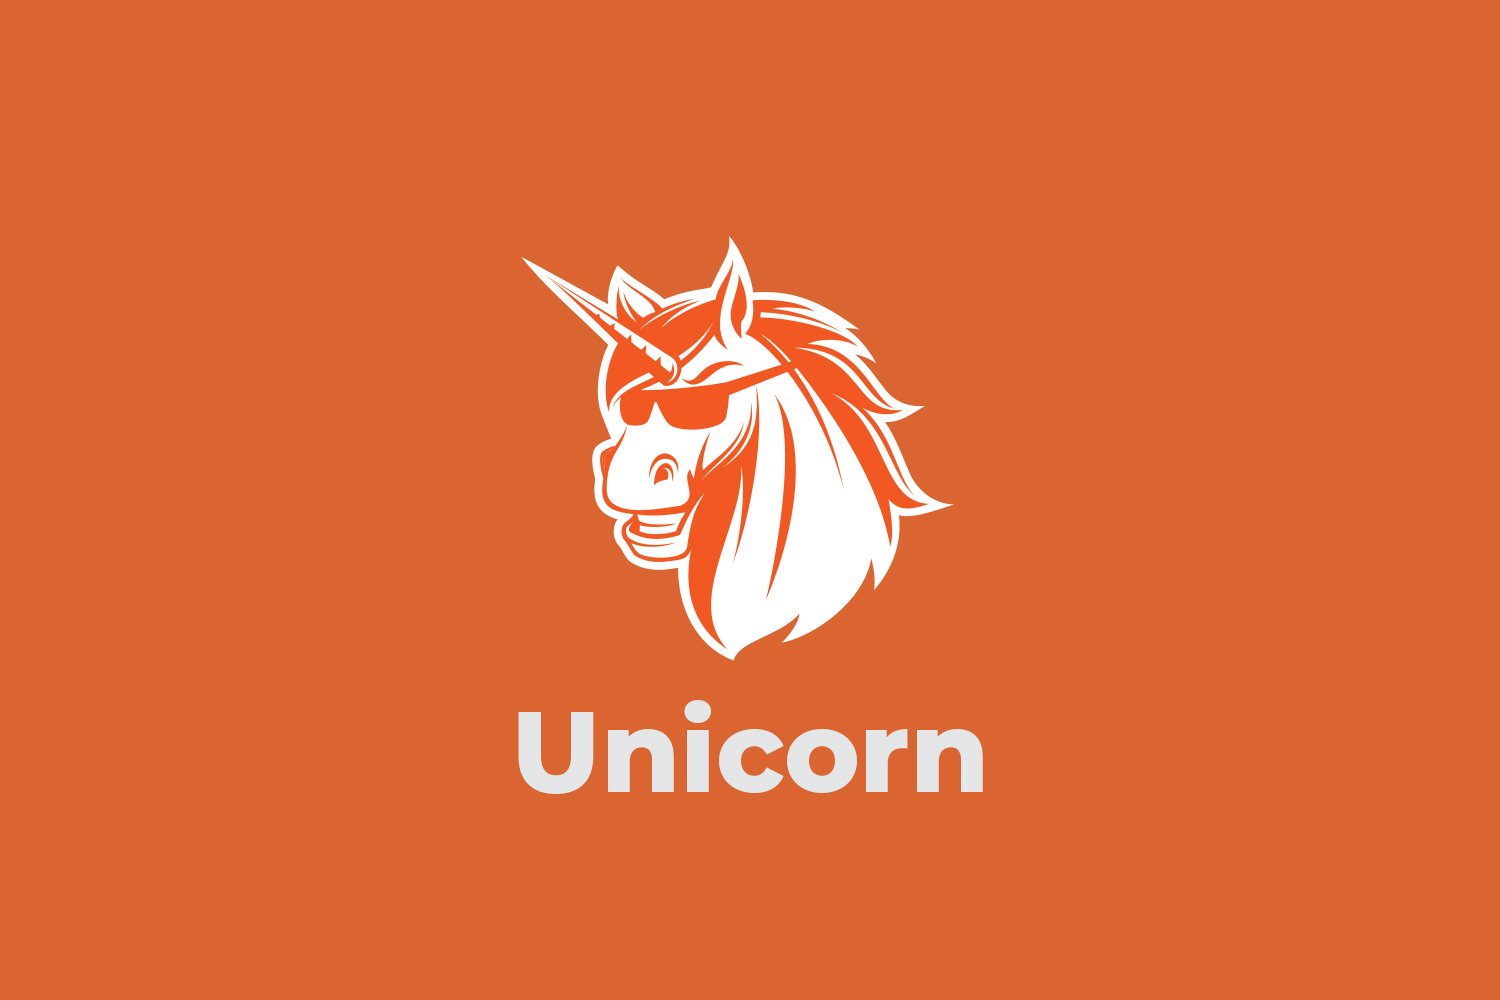 Cool Unicorn Mascot Logo cover image.